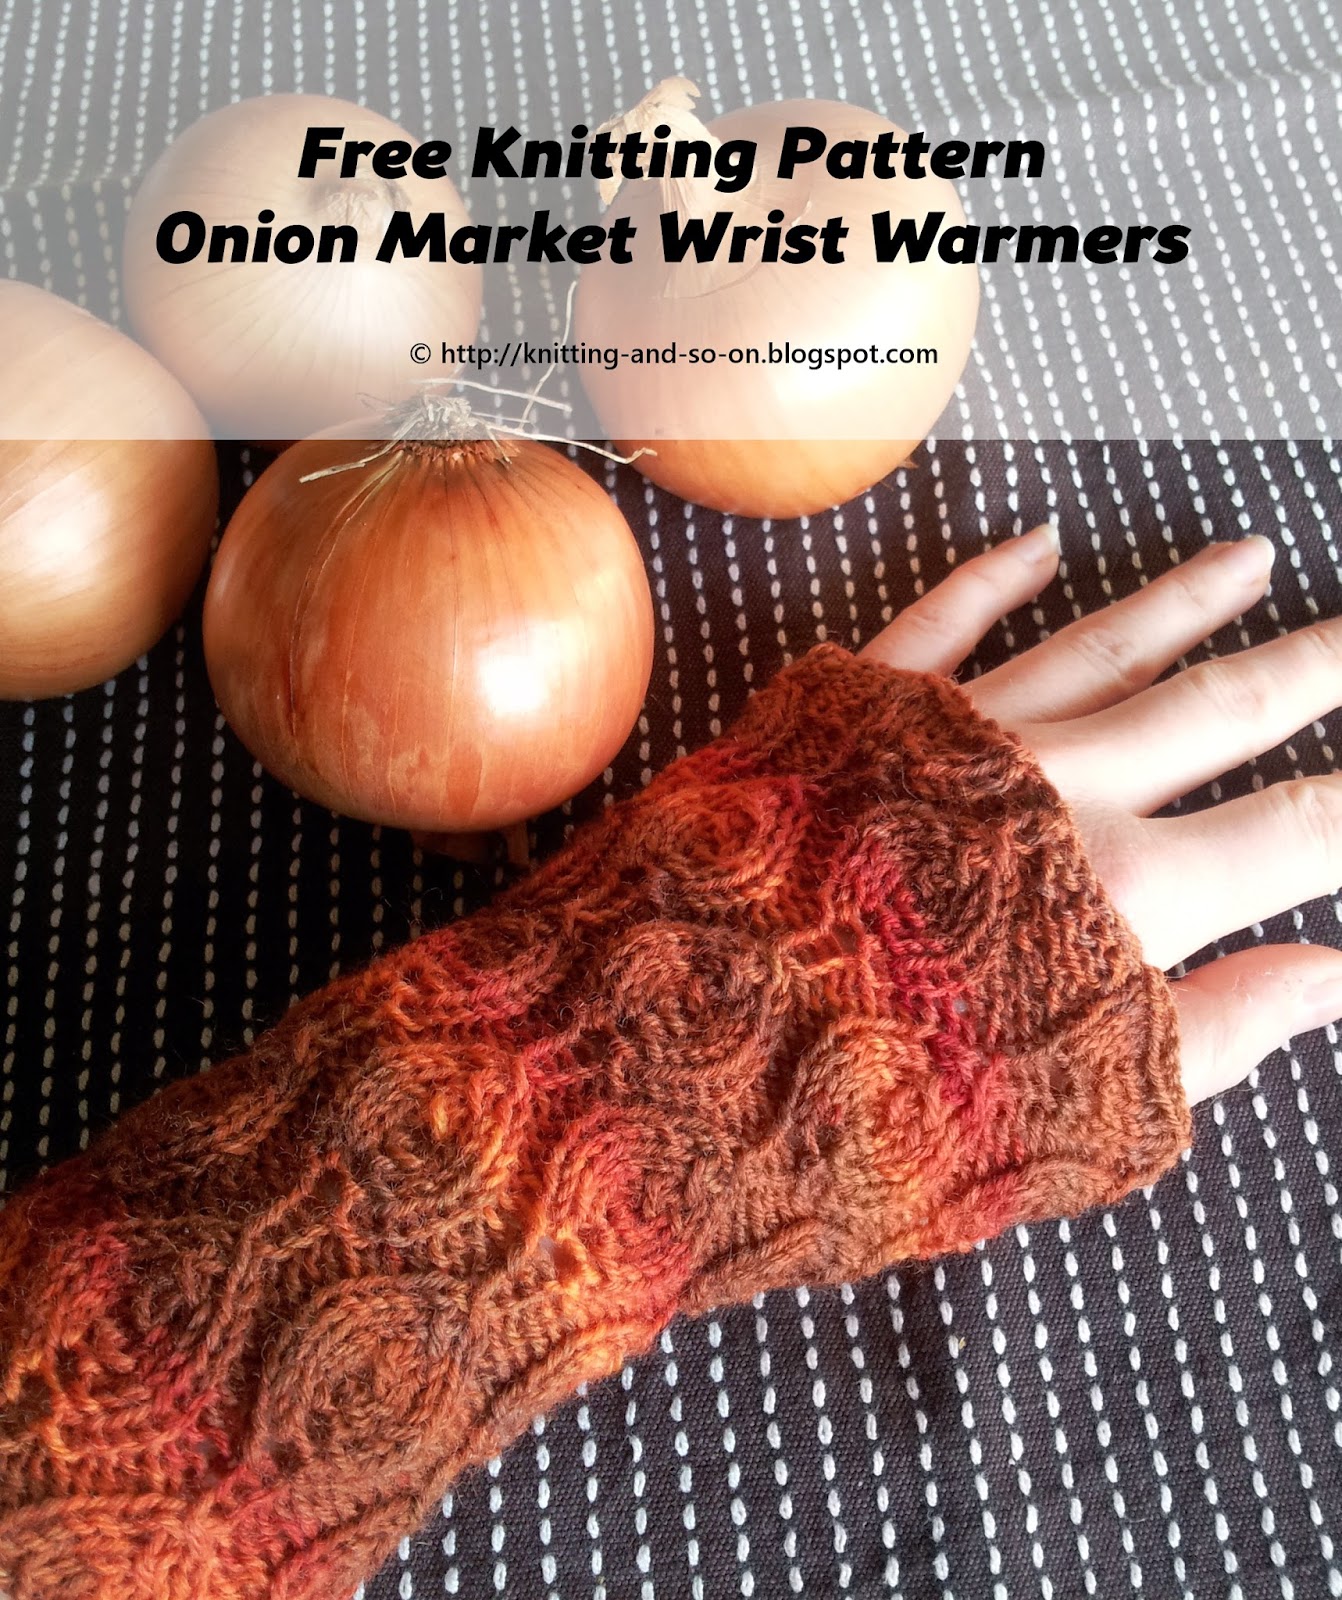 Free Knitting Pattern: Onion Market Wrist Warmers; http://knitting-and-so-on.blogspot.com